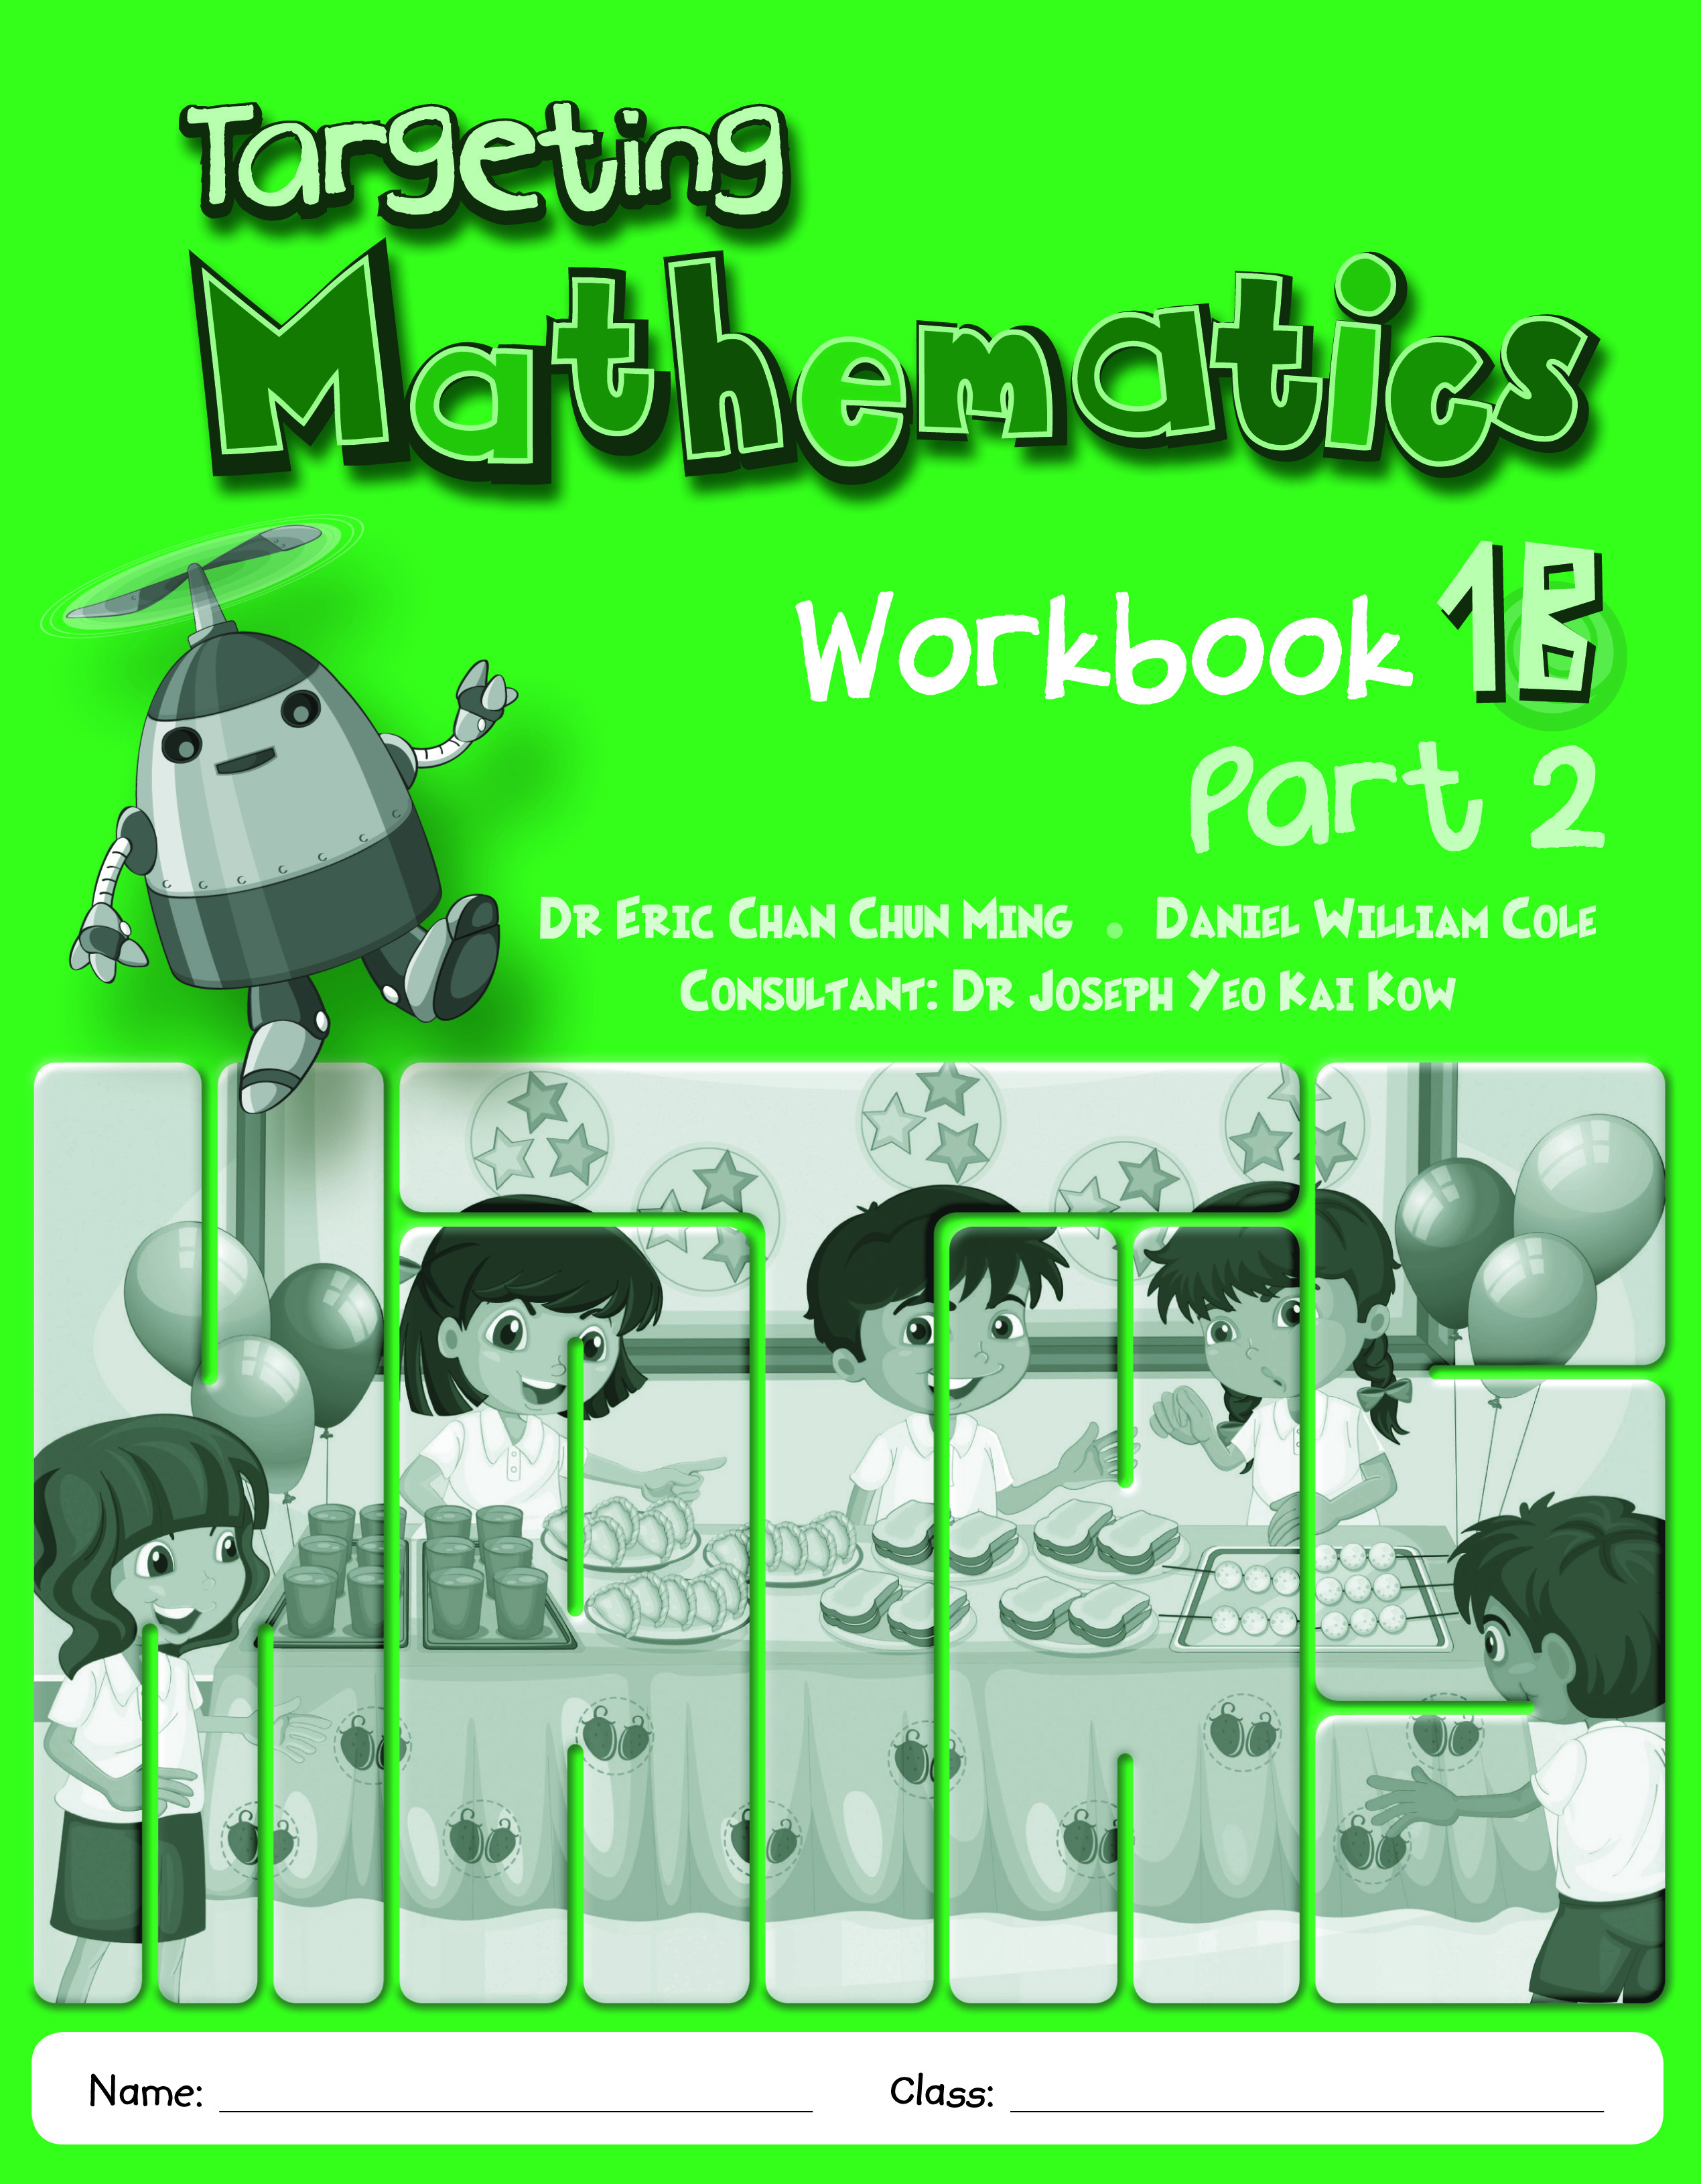 Targeting Mathematics 1B Workbook Part 2